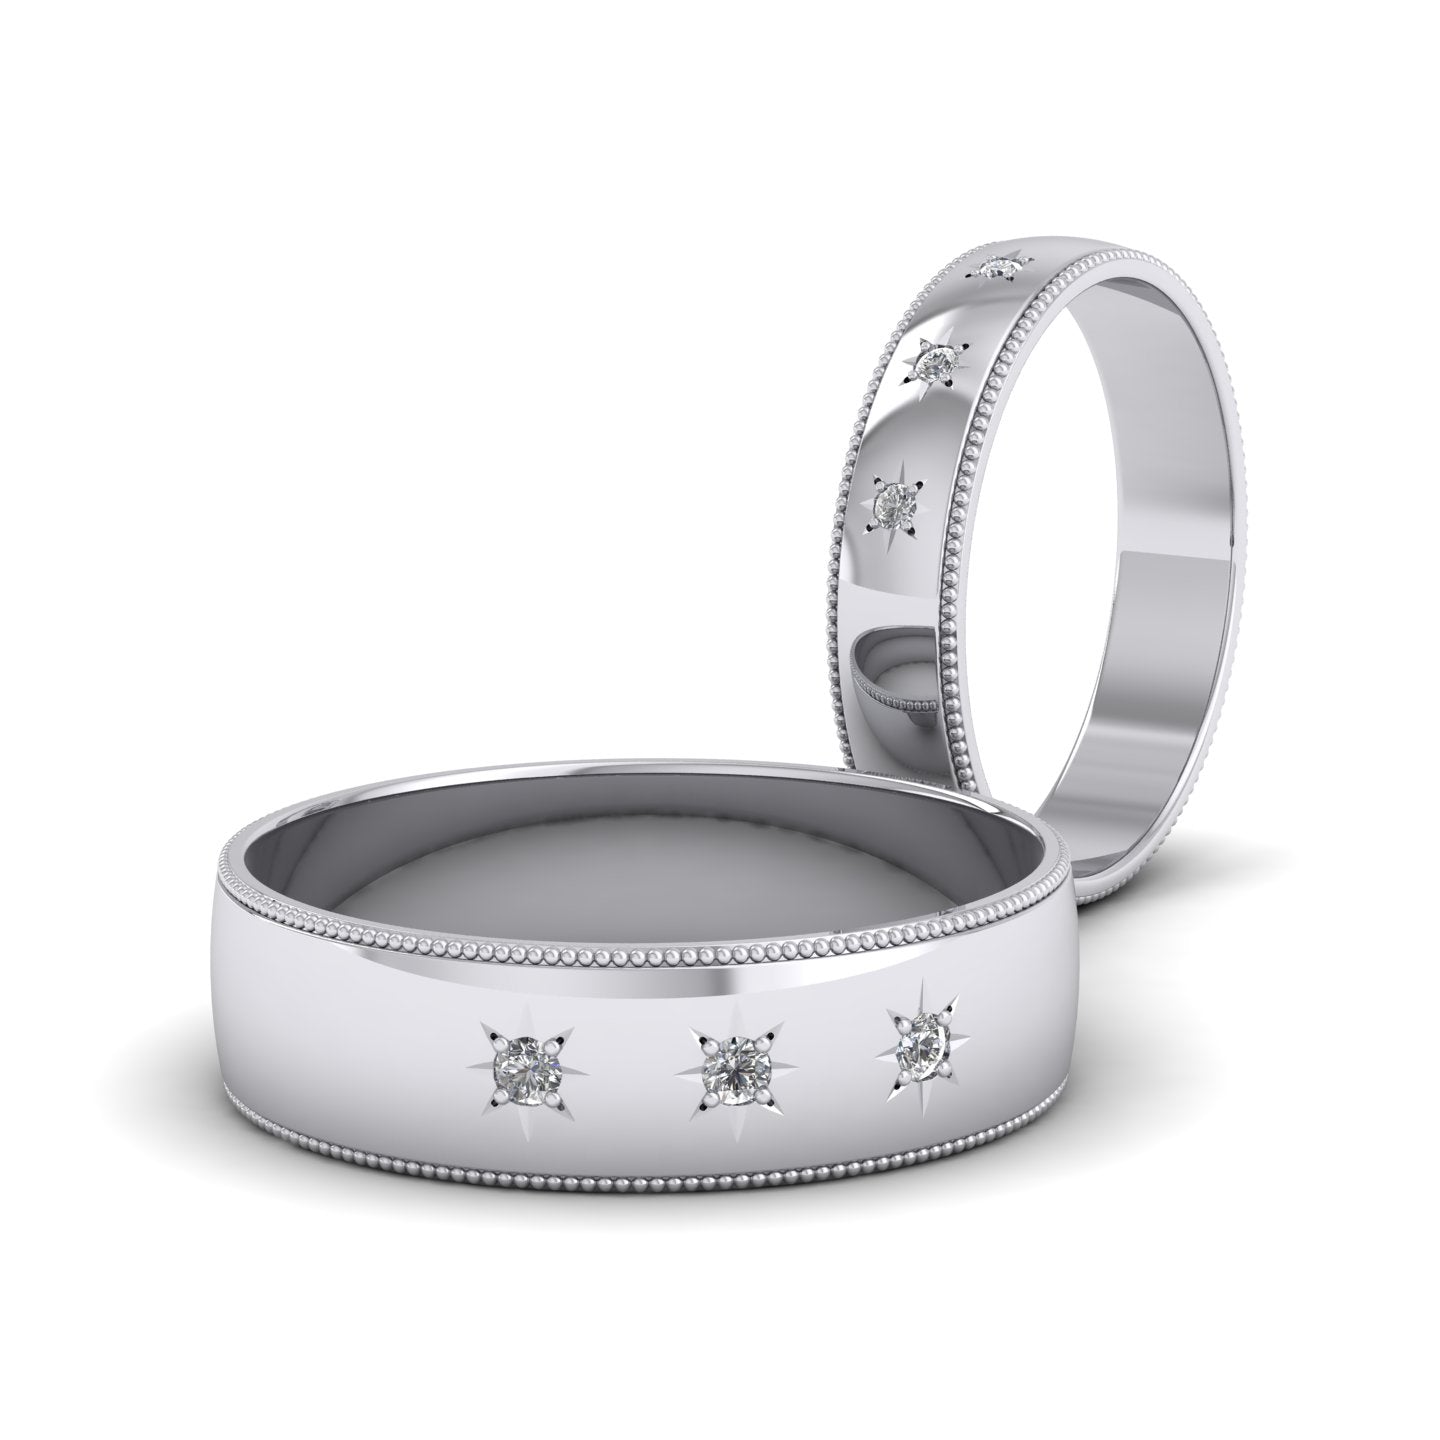 Millgrained Edge And Three Star Diamond Set 950 Platinum 4mm Wedding Ring